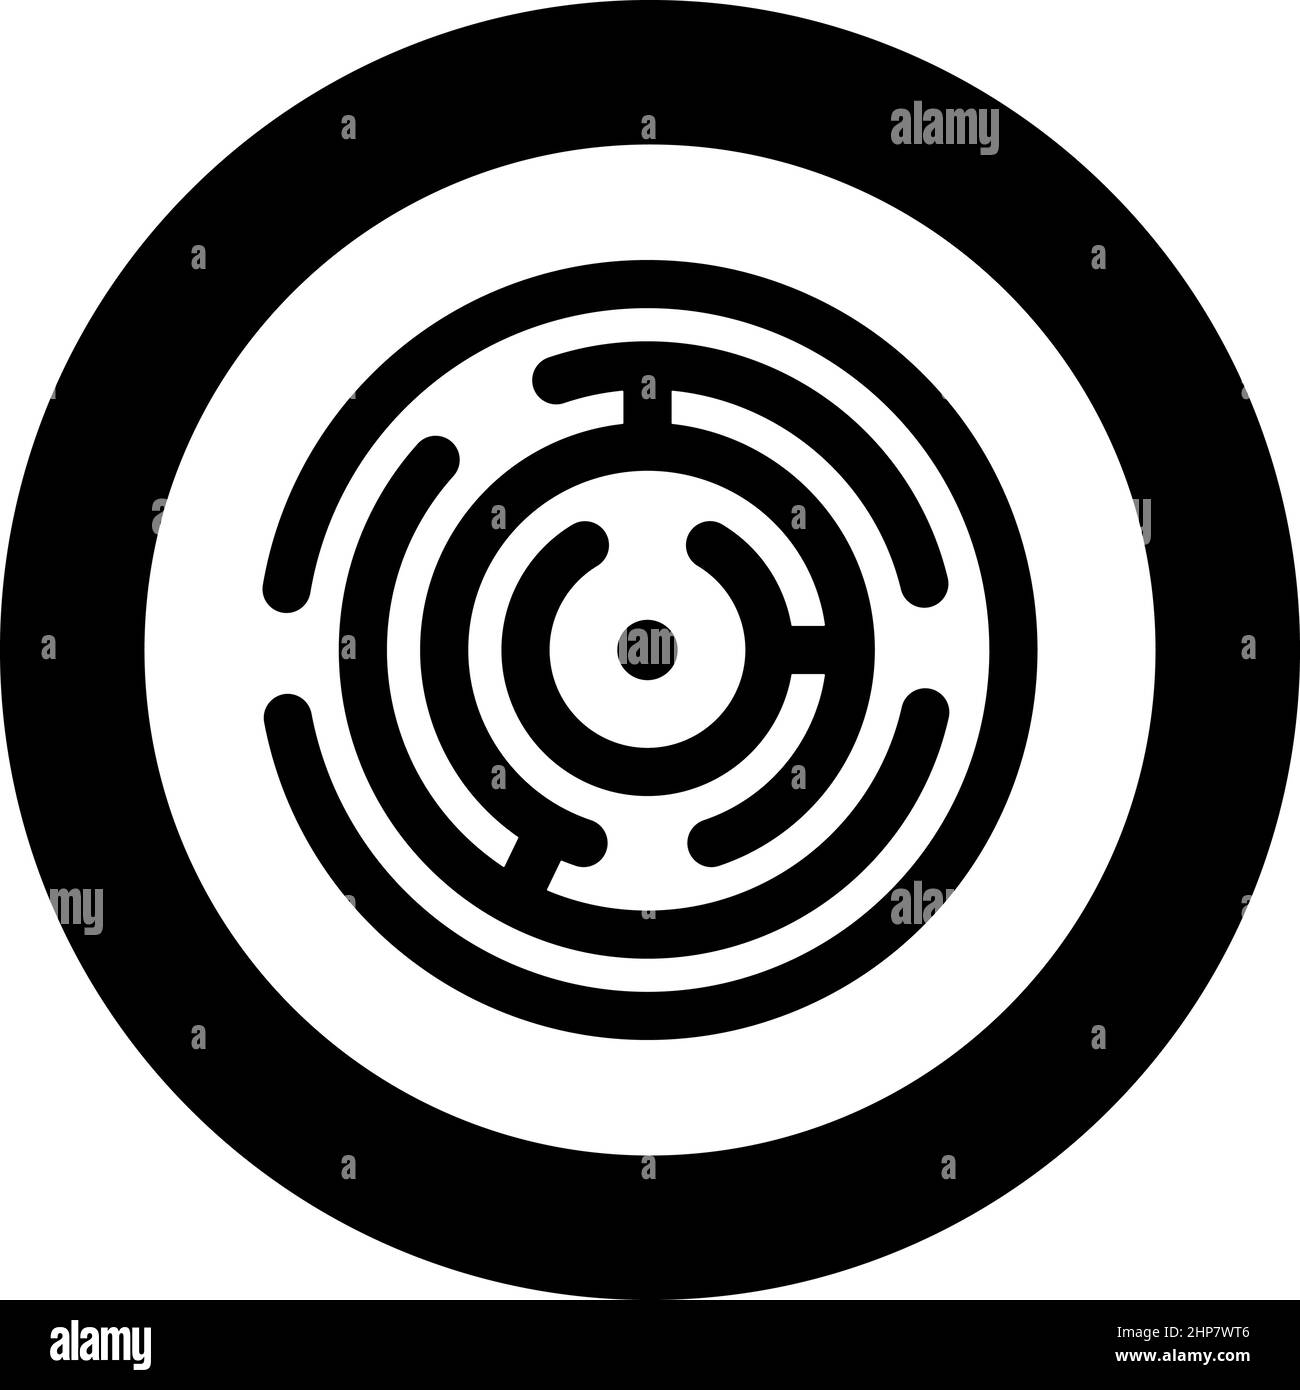 Rundes Labyrinth-Symbol im Kreis Runde schwarze Farbe Vektor Illustration Bild durchgezogene Umrisse Stil Stock Vektor